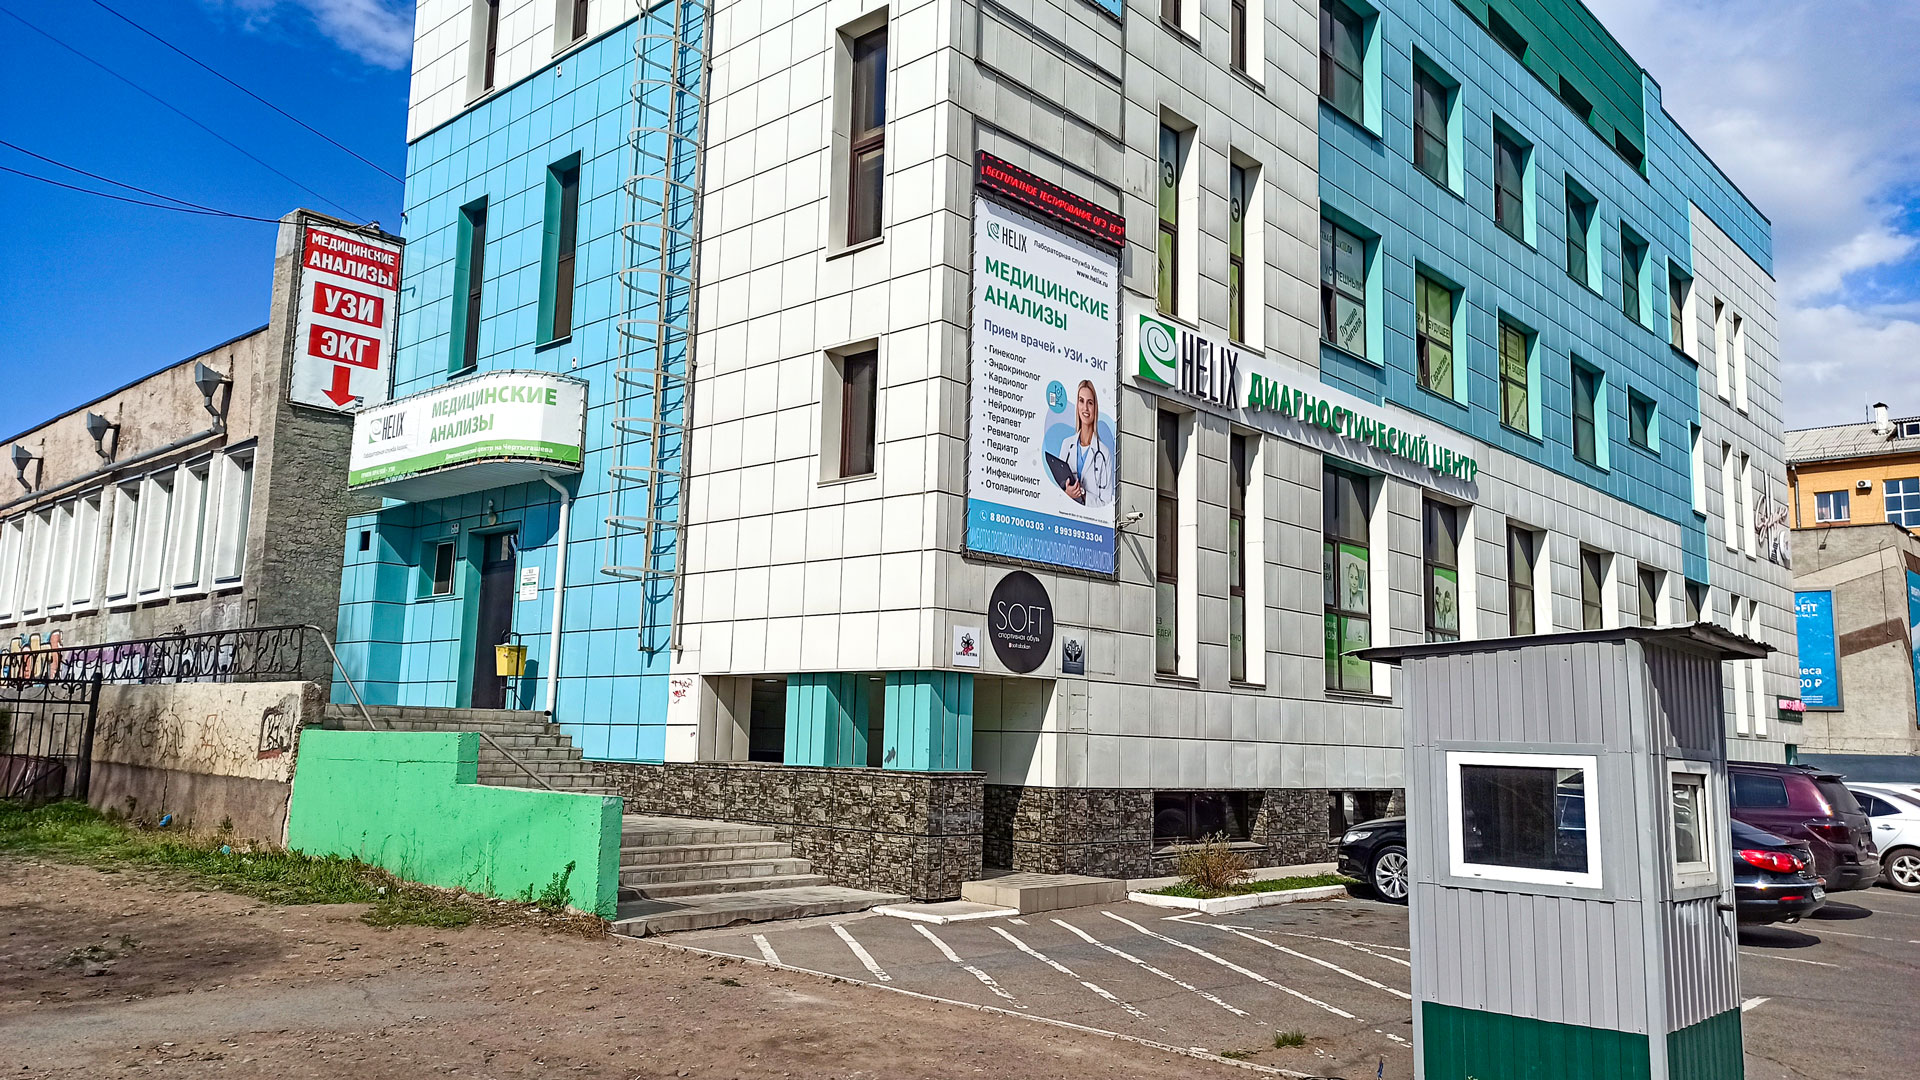 Диагностический центр "Хеликс" в Абакане на Чертыгашева.